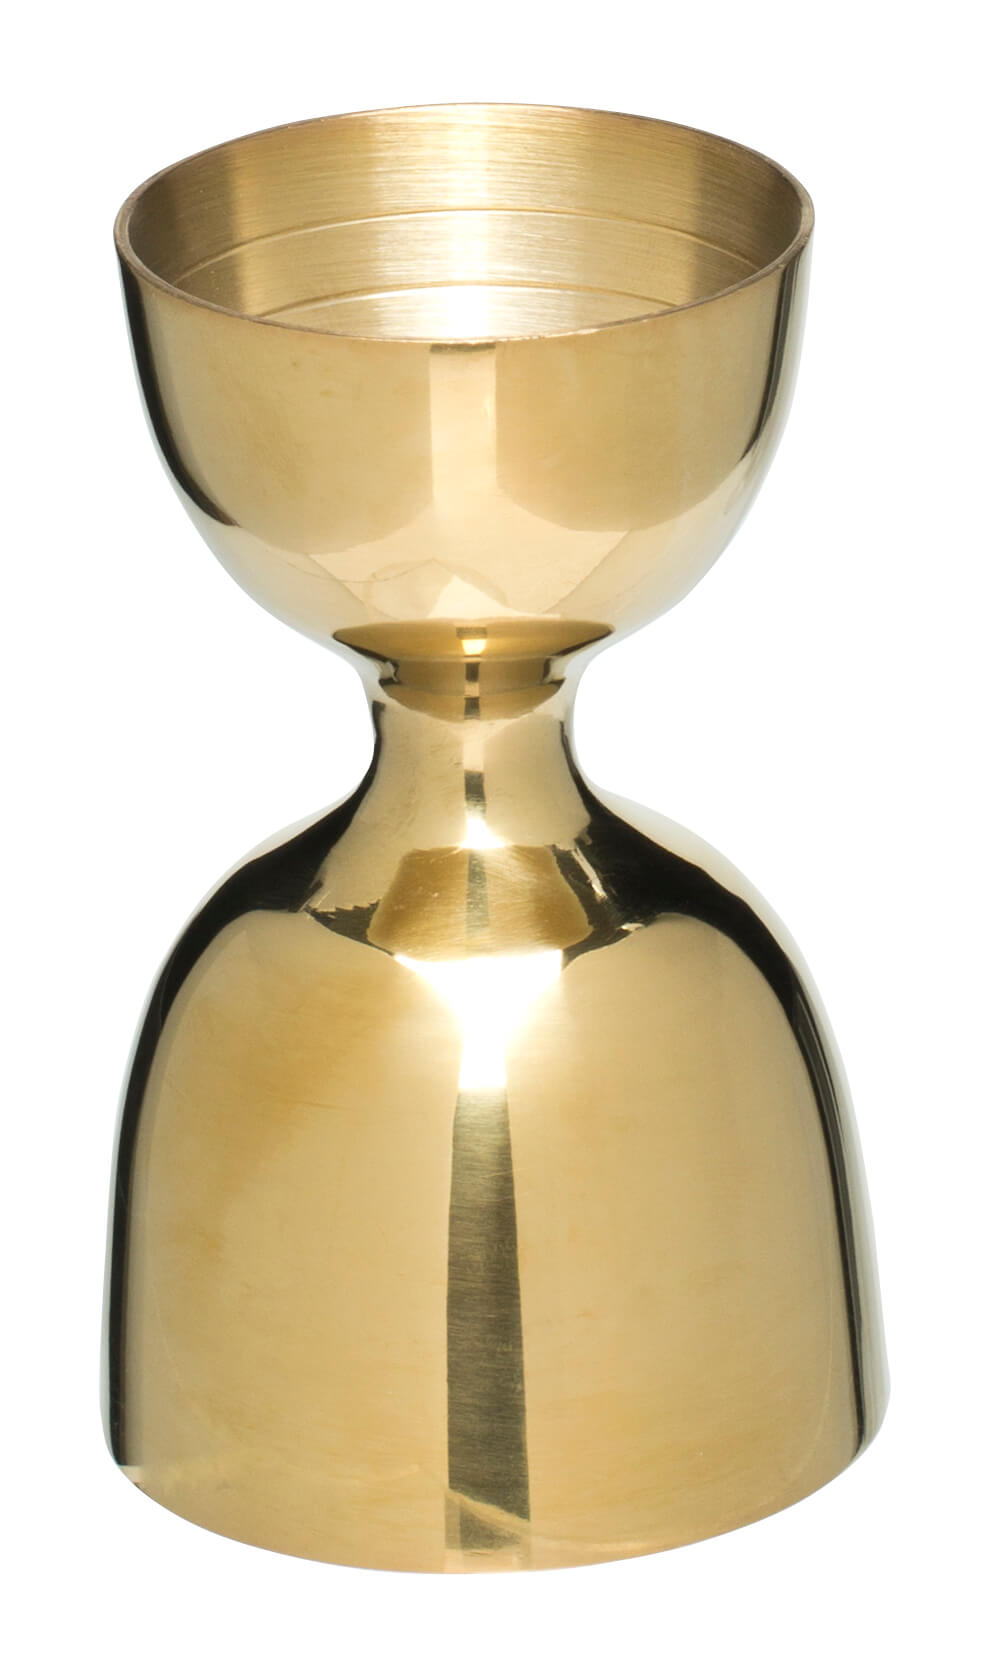 Bell jigger, gold look - stainless steel (30/60ml)